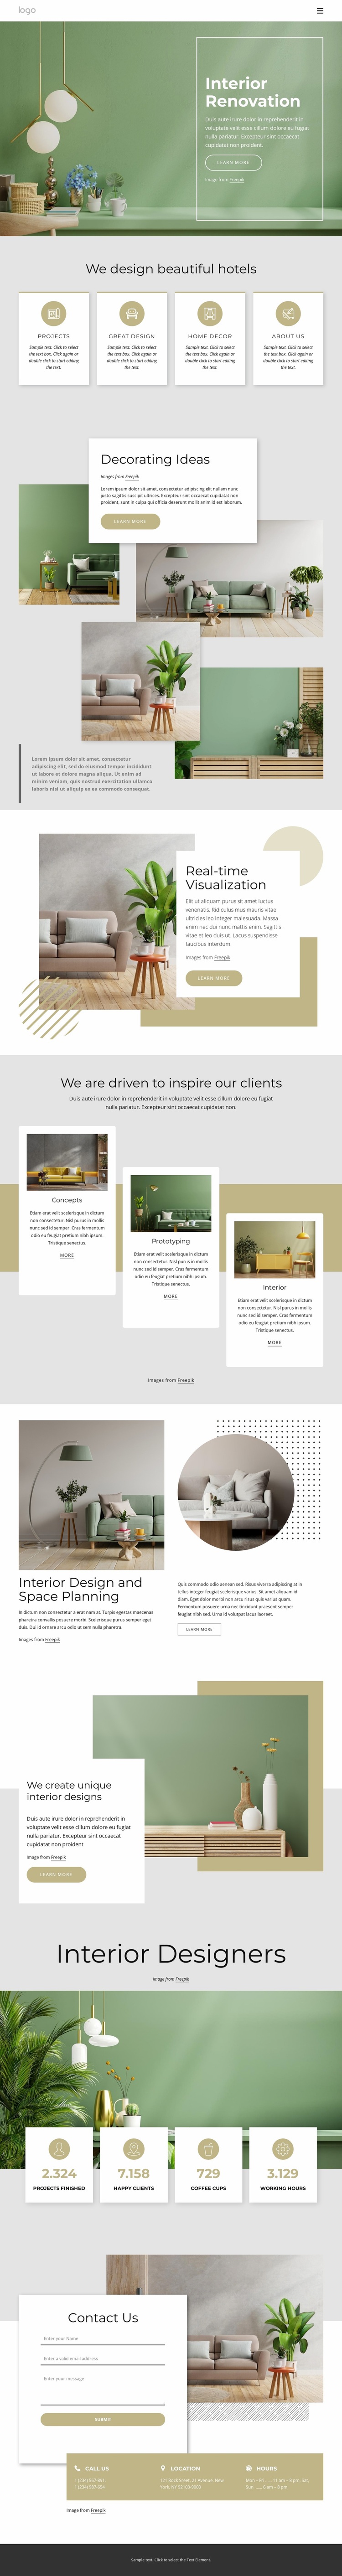 Architecture and interior design agency Website Design